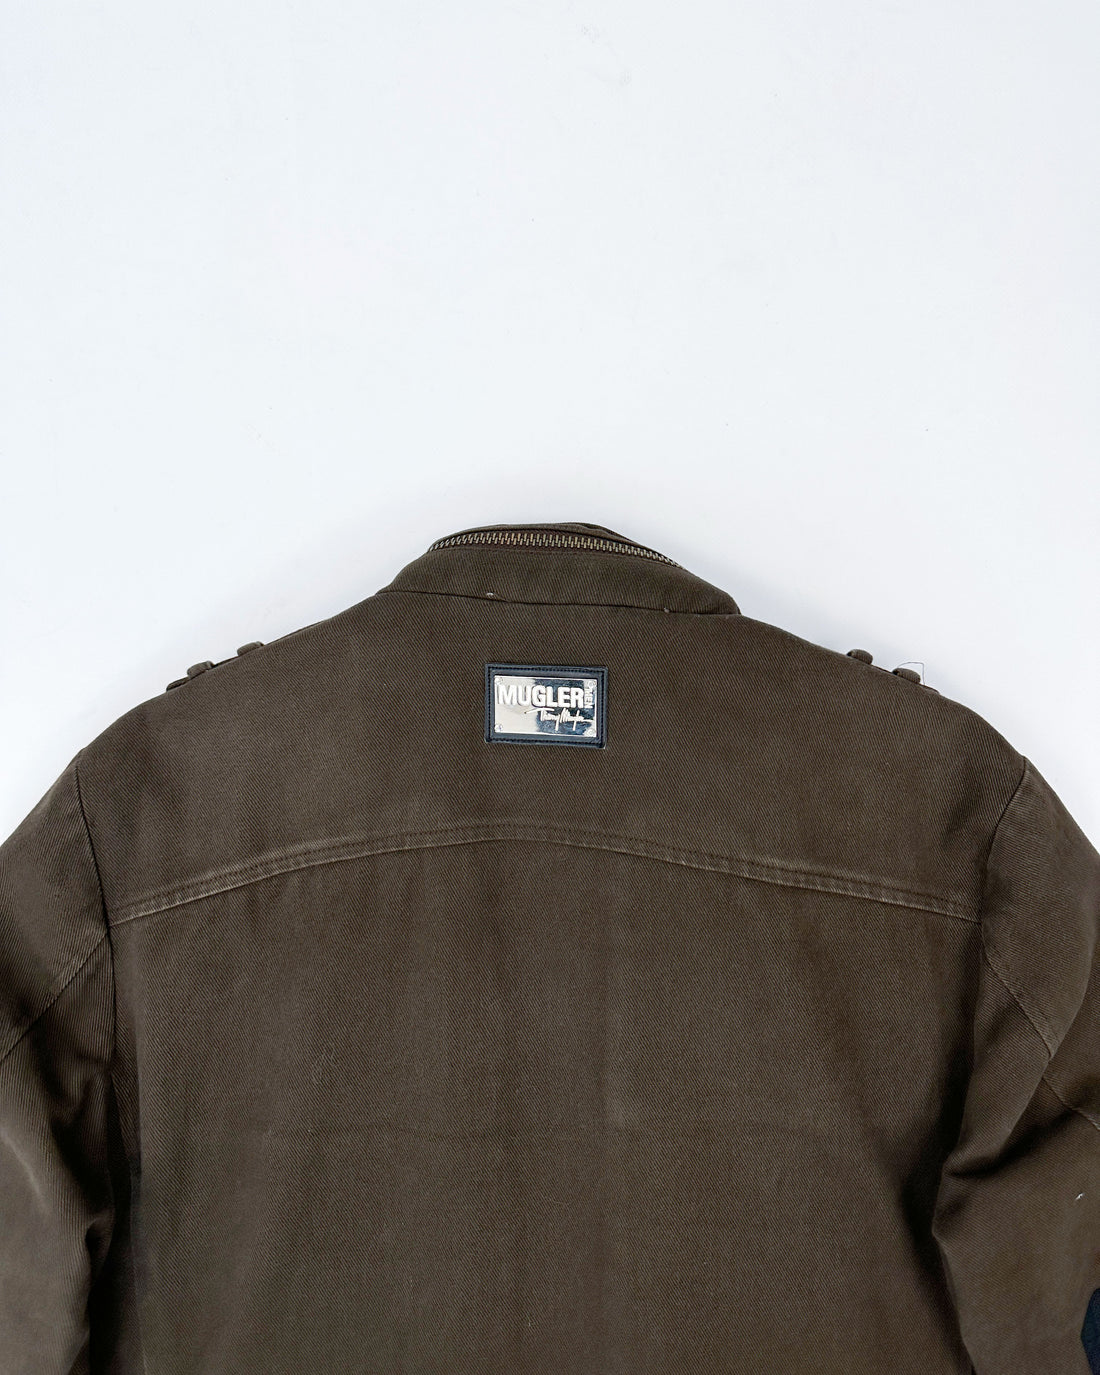 Mugler Dark Brown Straight Jacket 1990's